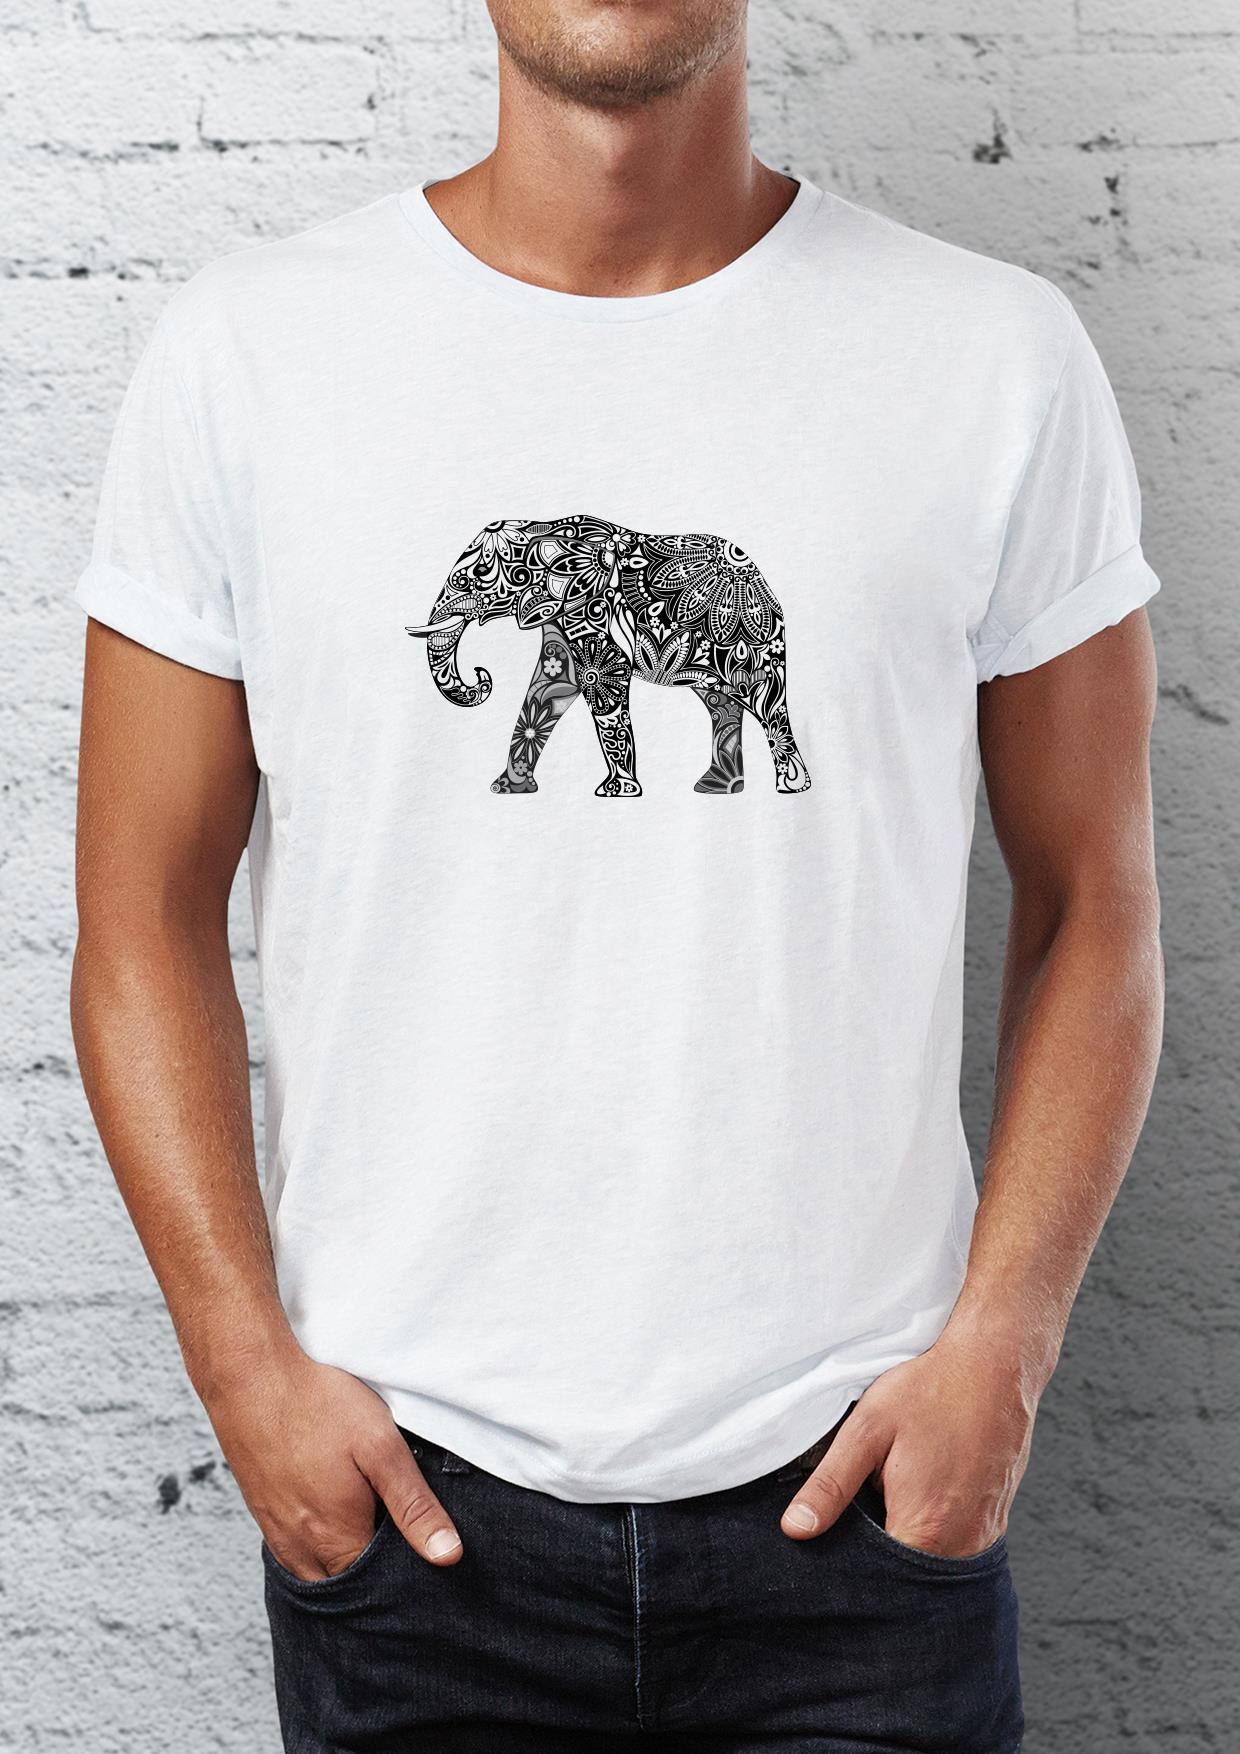 Elephant printed Crew Neck men's t -shirt